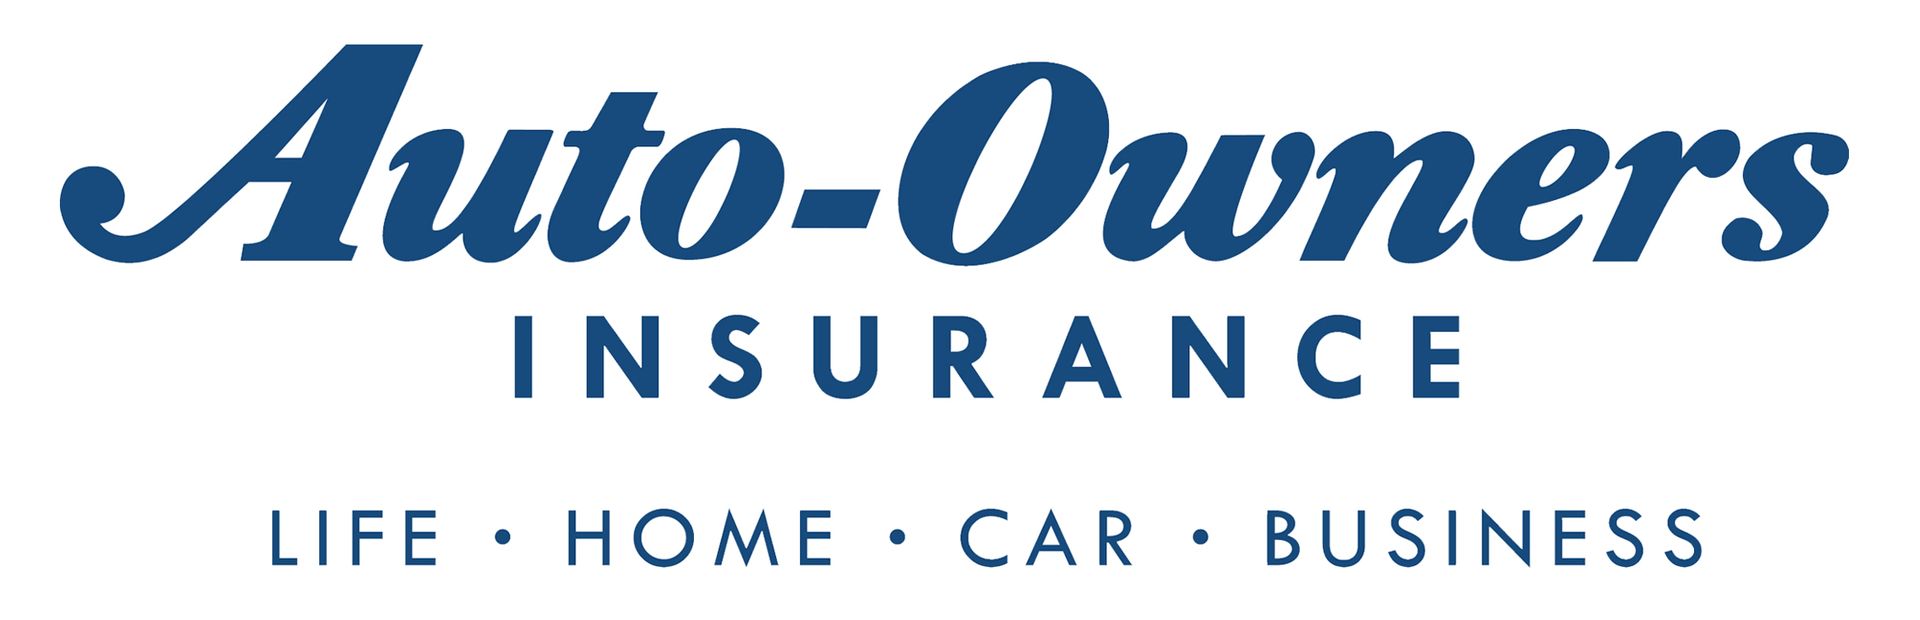 Auto owner insurance logo